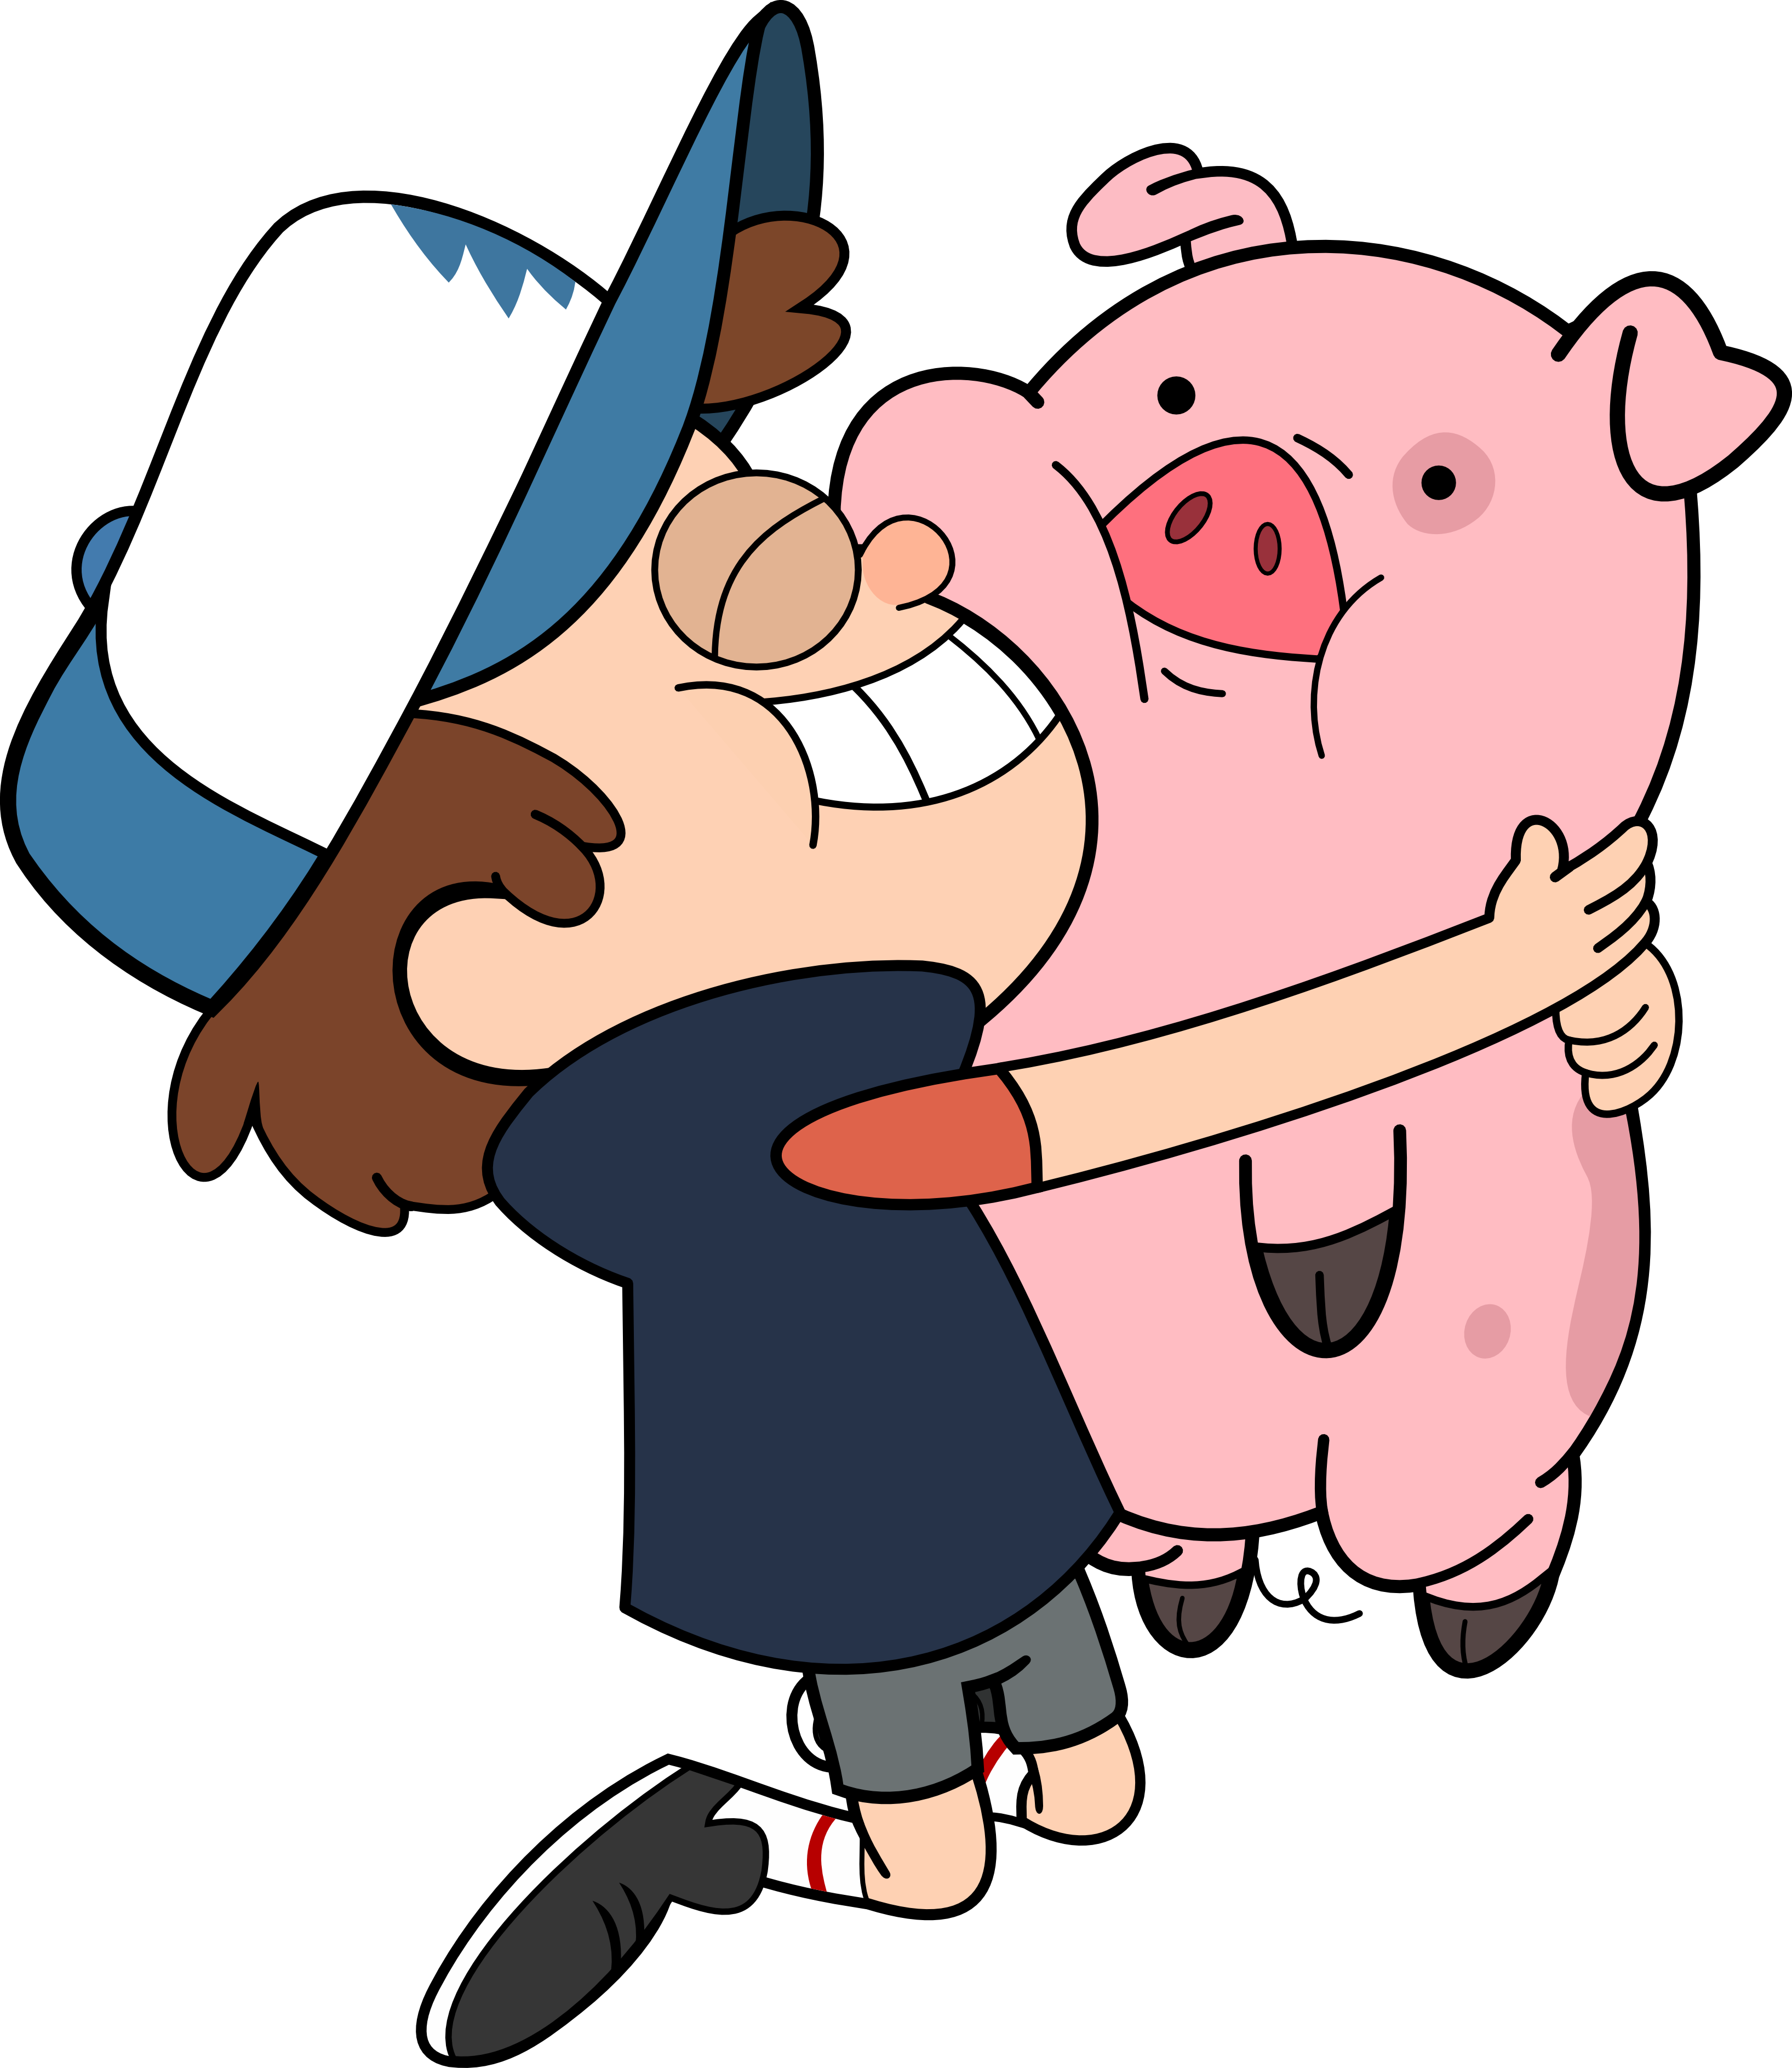 Best Friends Hugging Cartoons images